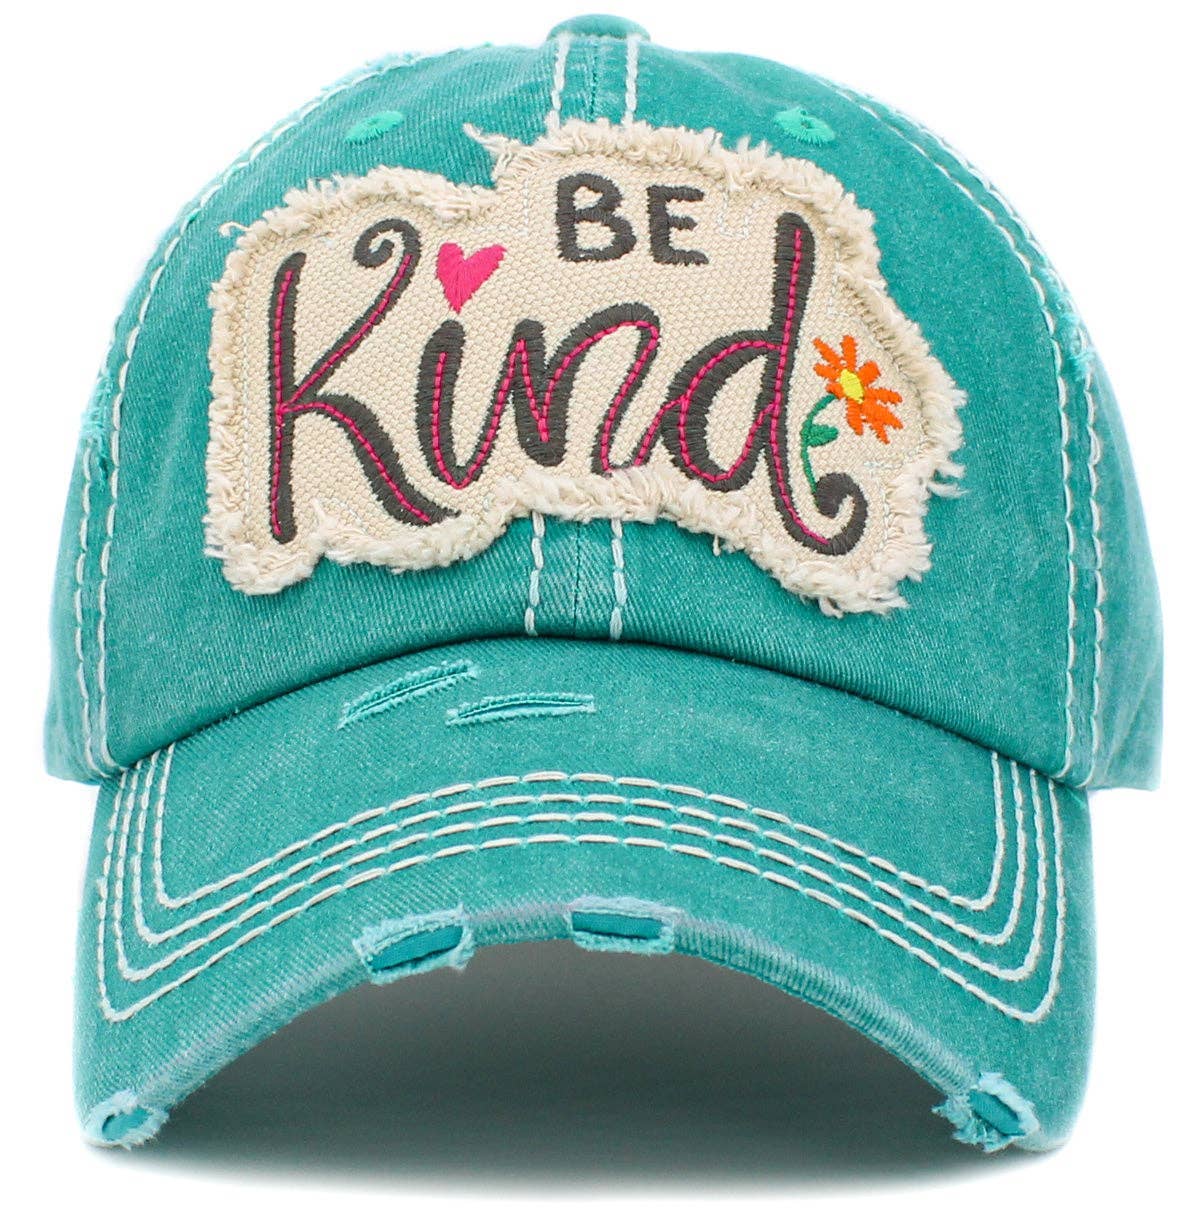 Be Kind Vintage Washed Ball Cap